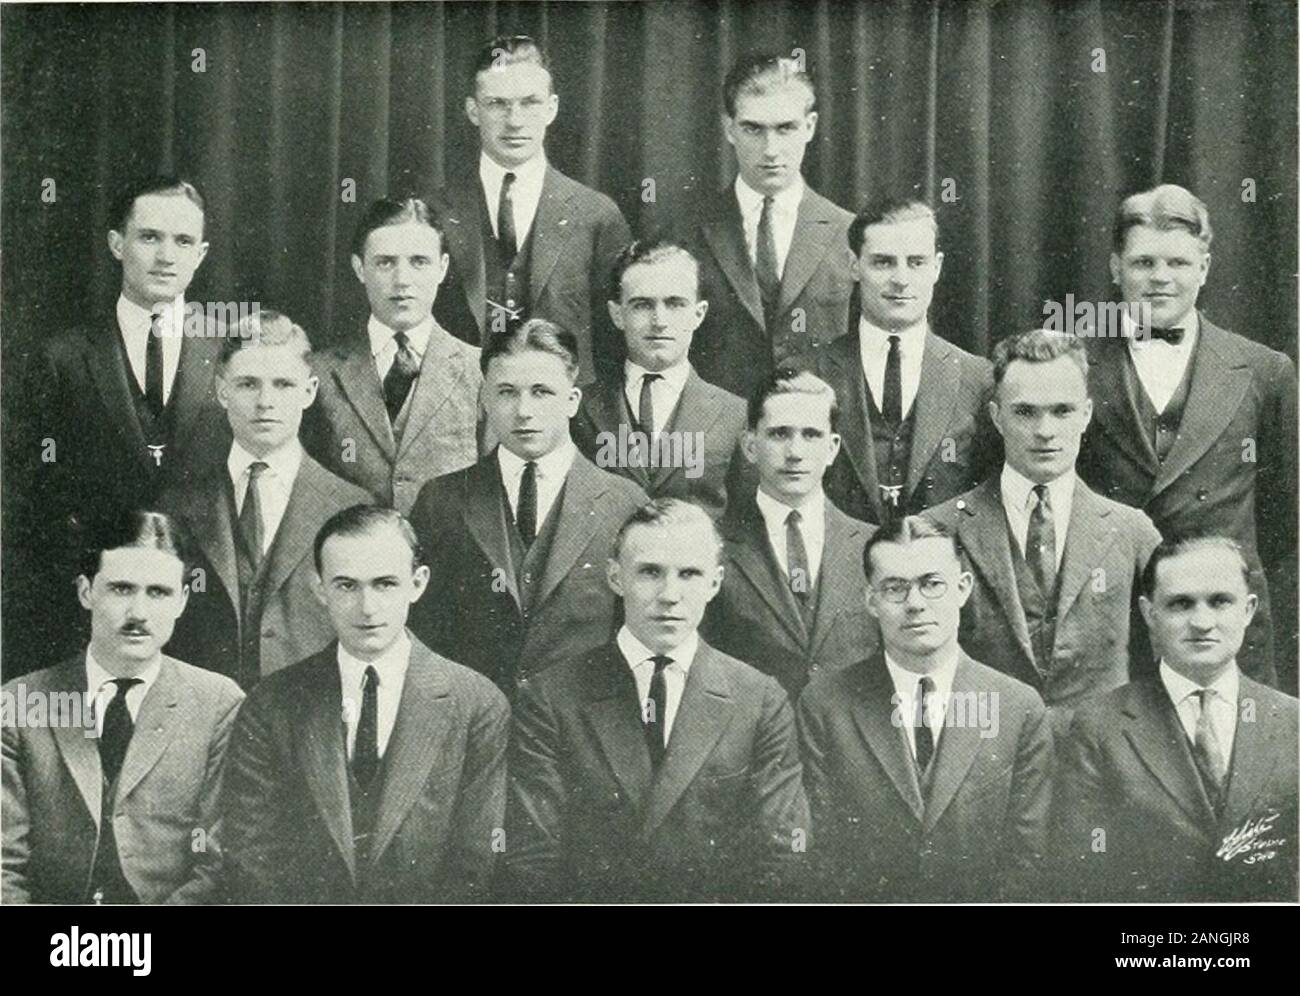 Purdue debris . torn row—Johnson, Hall, Brandenburg, Roberts, Cromer, Wilson row—Terman, E. Thompson, .lannev, |). Thnni]isi)u, Smith. Archer Third /»•--Kiltz. Herrin, Jordan, Beh]Fourth row—Beeson, Berlin. Blind, Evans, Baynes, Rogers Contour Founded at Purdue University 1920 MEMBERS IN FACULTY Dr. William K. Hatt Prof. William A. Knapp Prof. Ralph B. Wile MEMBERS IN UNIVERSITY R. L. HodsonJ. C. KeppleM. G. LeverenzX. E. Manville T. E. McCImu.1 H. A. AspergerW. R. Branitzk]H. S. (TrainD. DoggettR. O. Edwards T.J. McKim R. F. Miller C. W. Moellering O. Reed J. H. Shewmaker L. A. Elsener R. C. Stock Photo